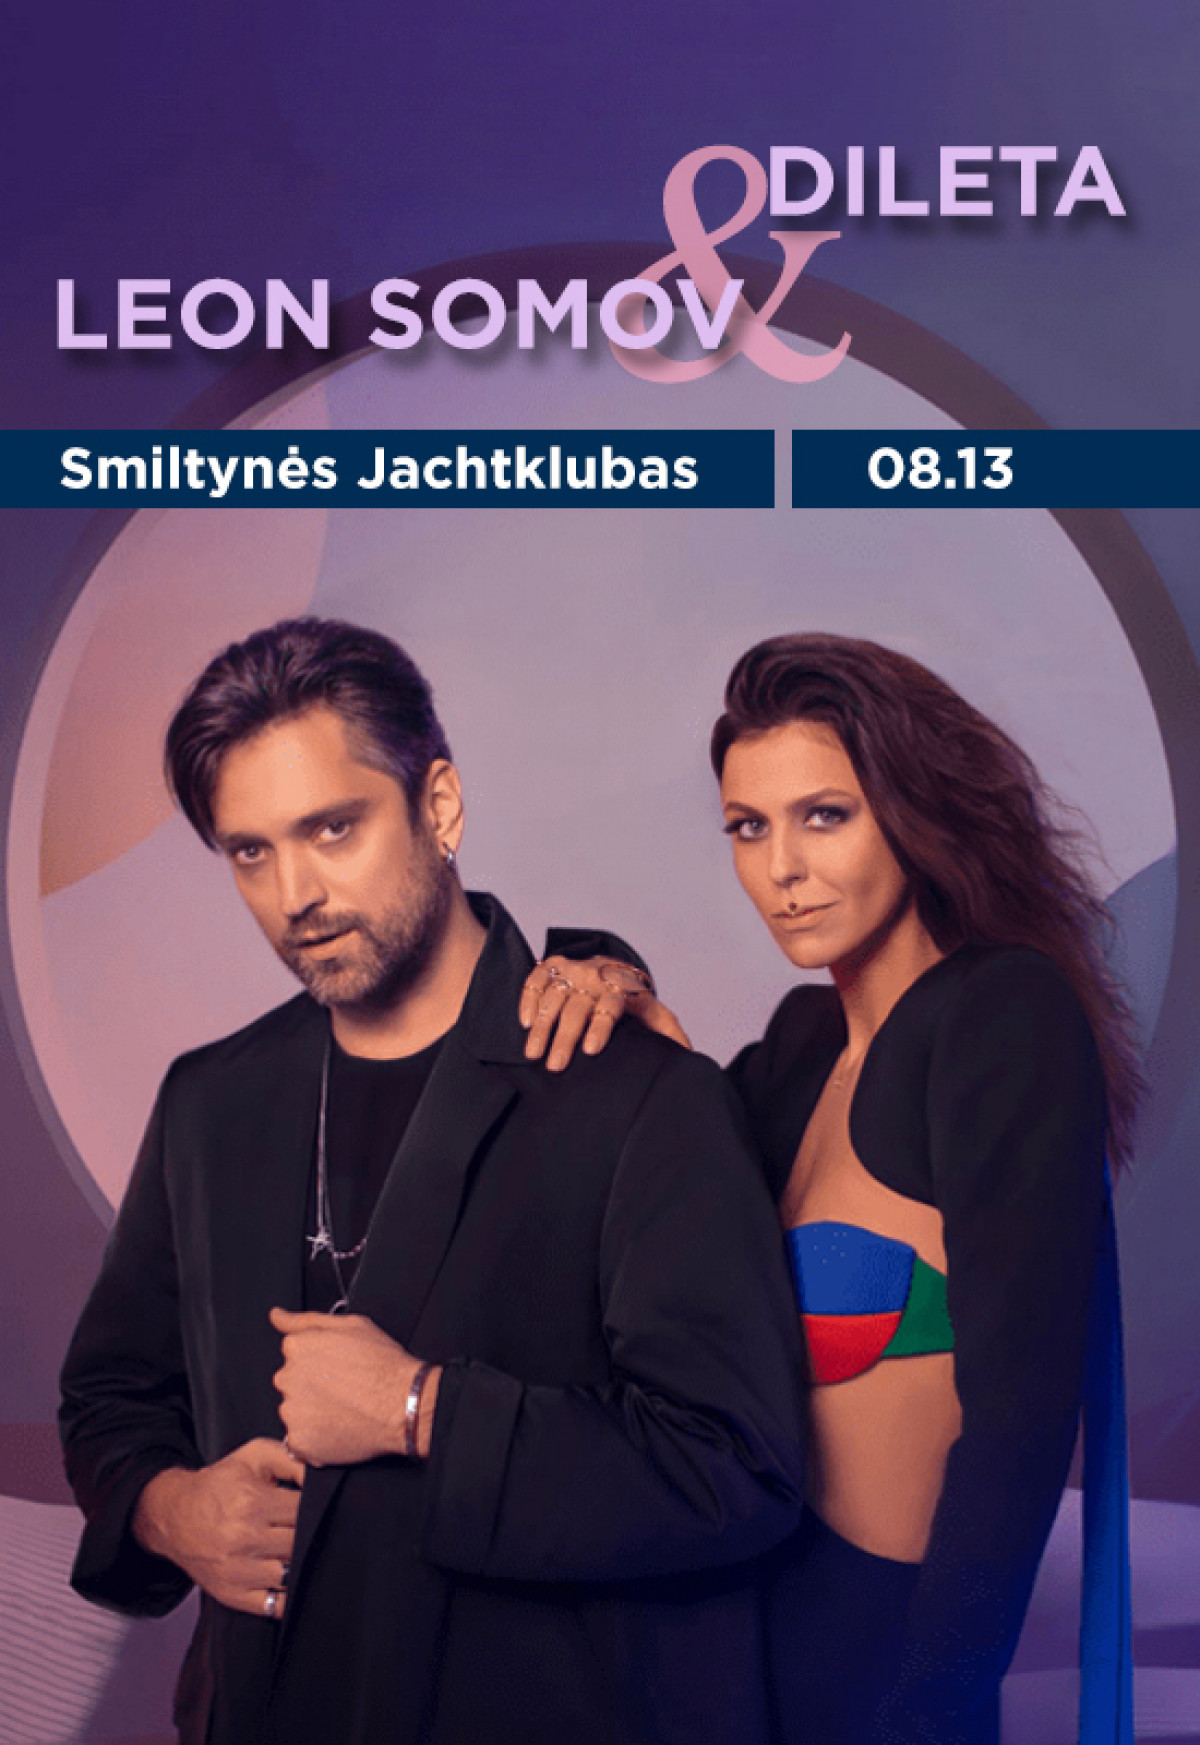 Leon Somov & Dileta / Smiltynės Jachtklubas, Klaipėda